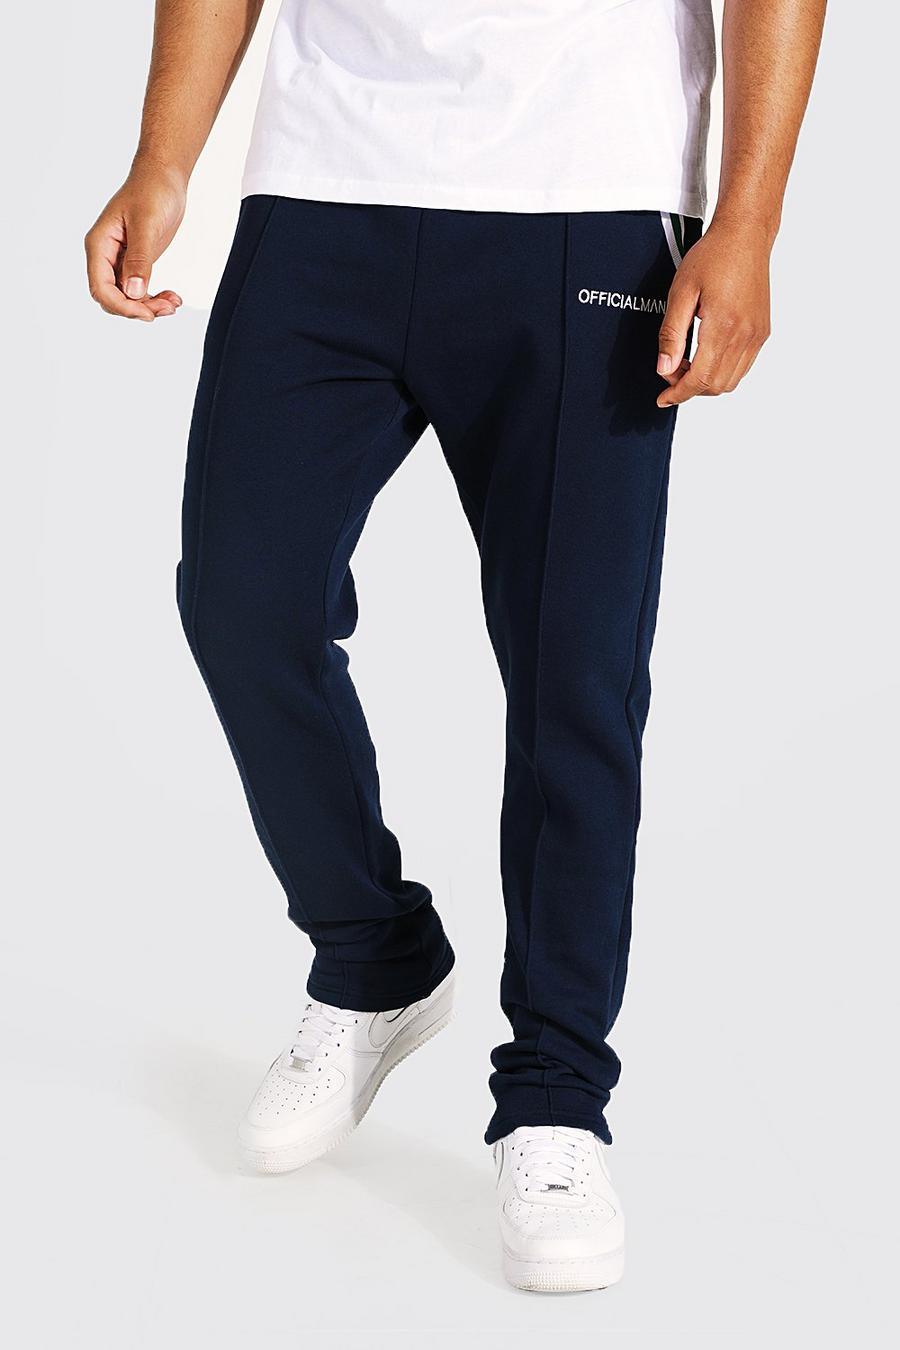 Pantaloni tuta Tall Slim Fit con nervature, strisce e tasche, Navy blu oltremare image number 1